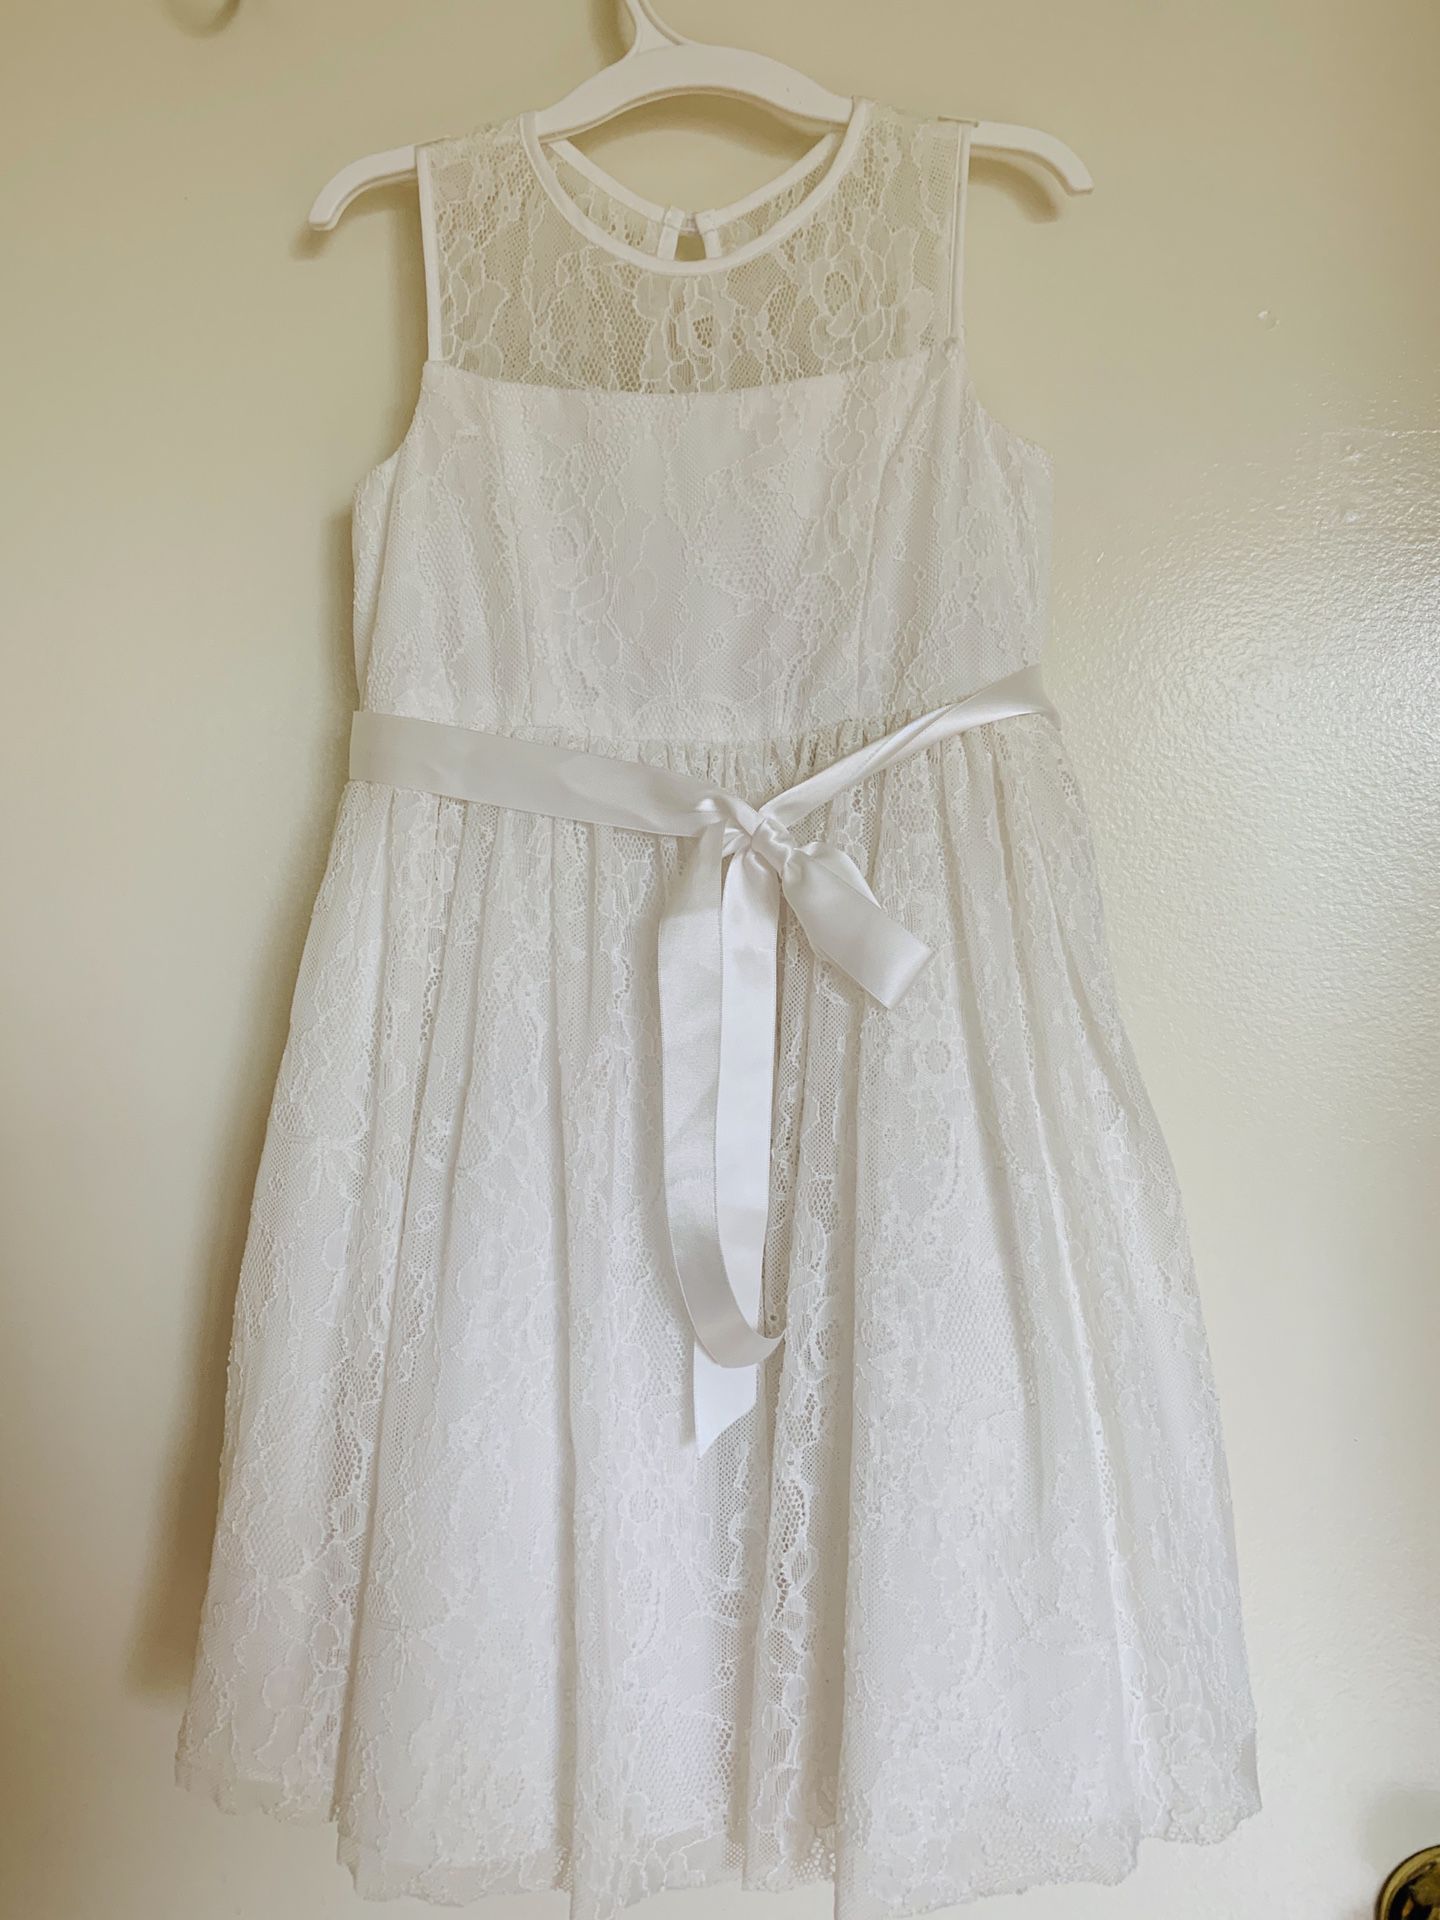 Girls white dress